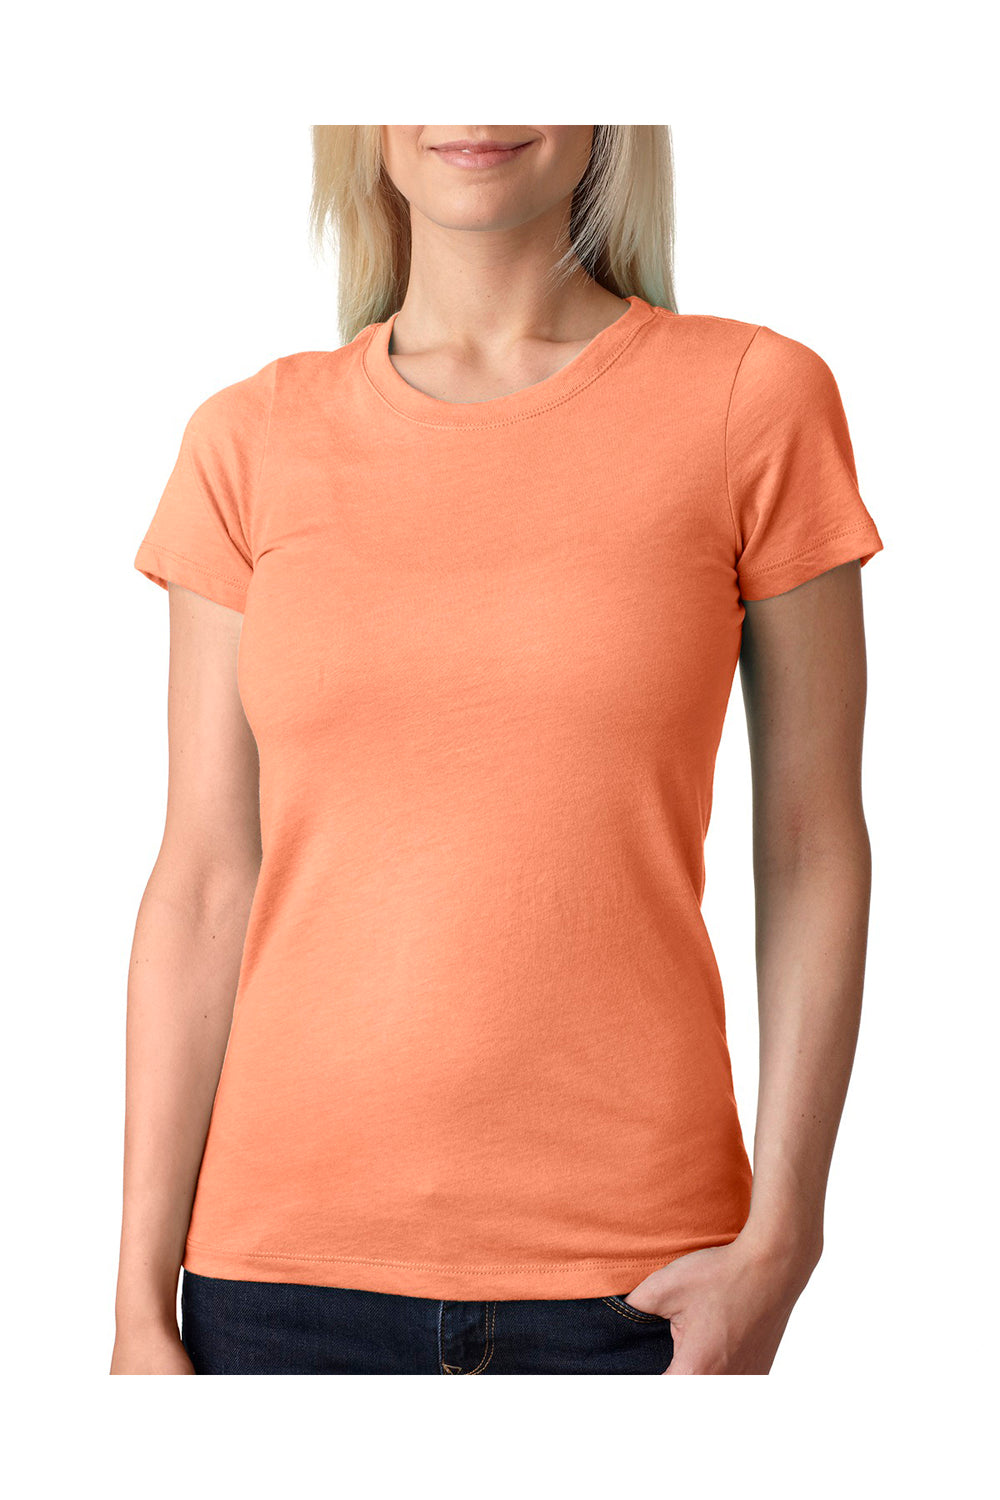 Next Level 6710 Womens Jersey Short Sleeve Crewneck T-Shirt Light Orange Front